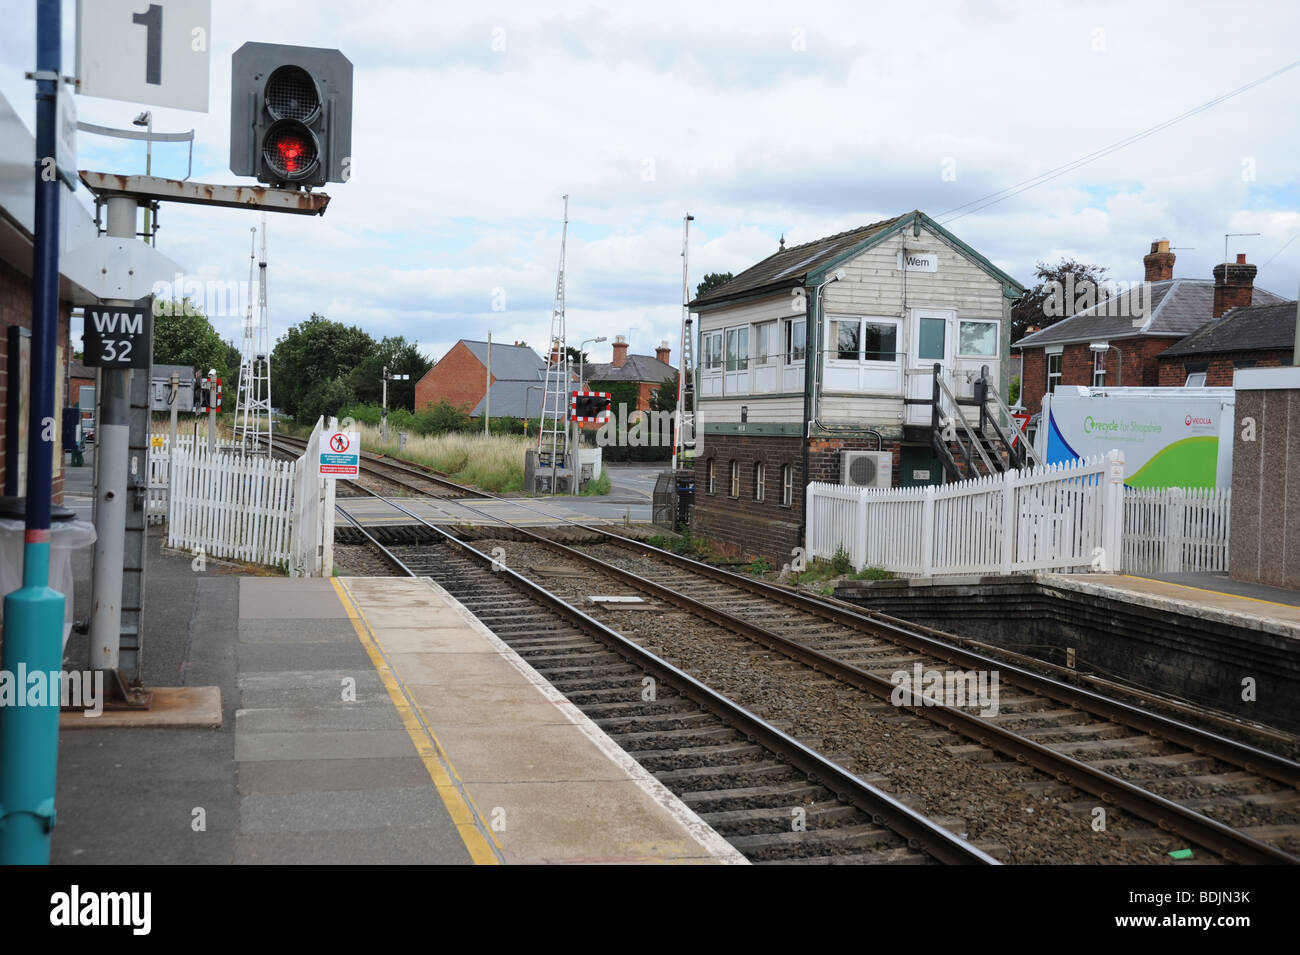 Signal box at Wem railway station Stock Photo